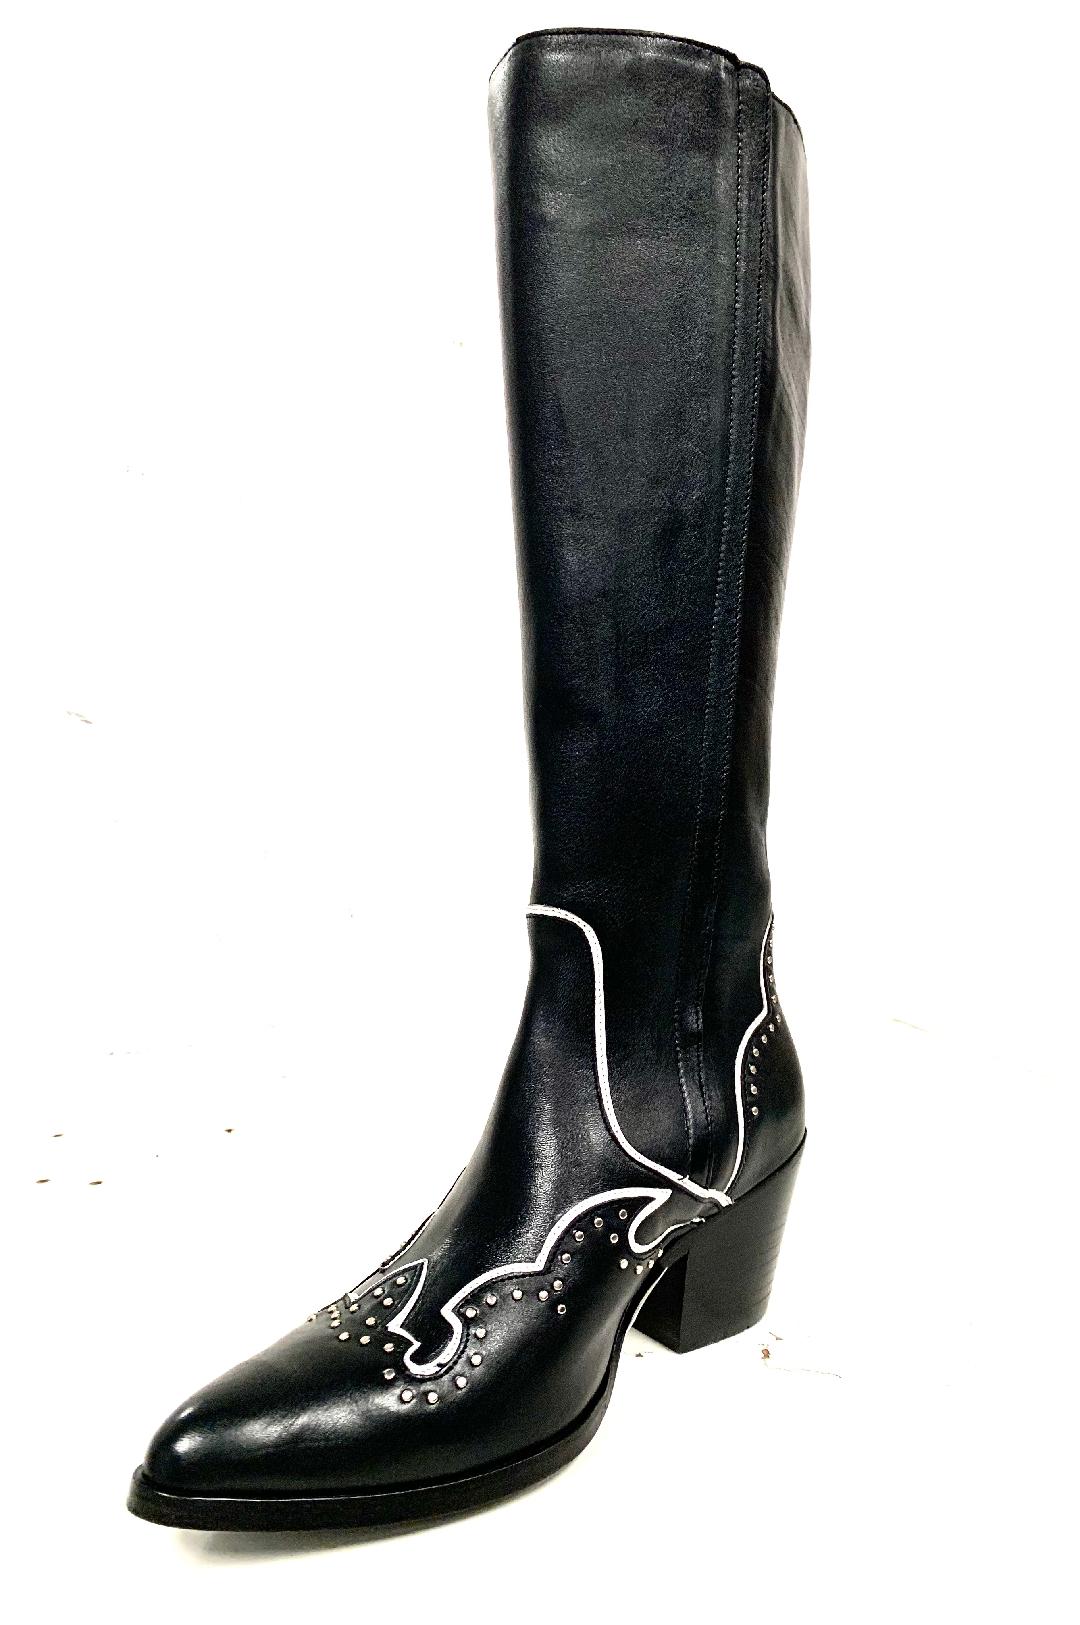 TWCL056-3 Tumbleweed Boots Women's ARIA Black Tall Boot